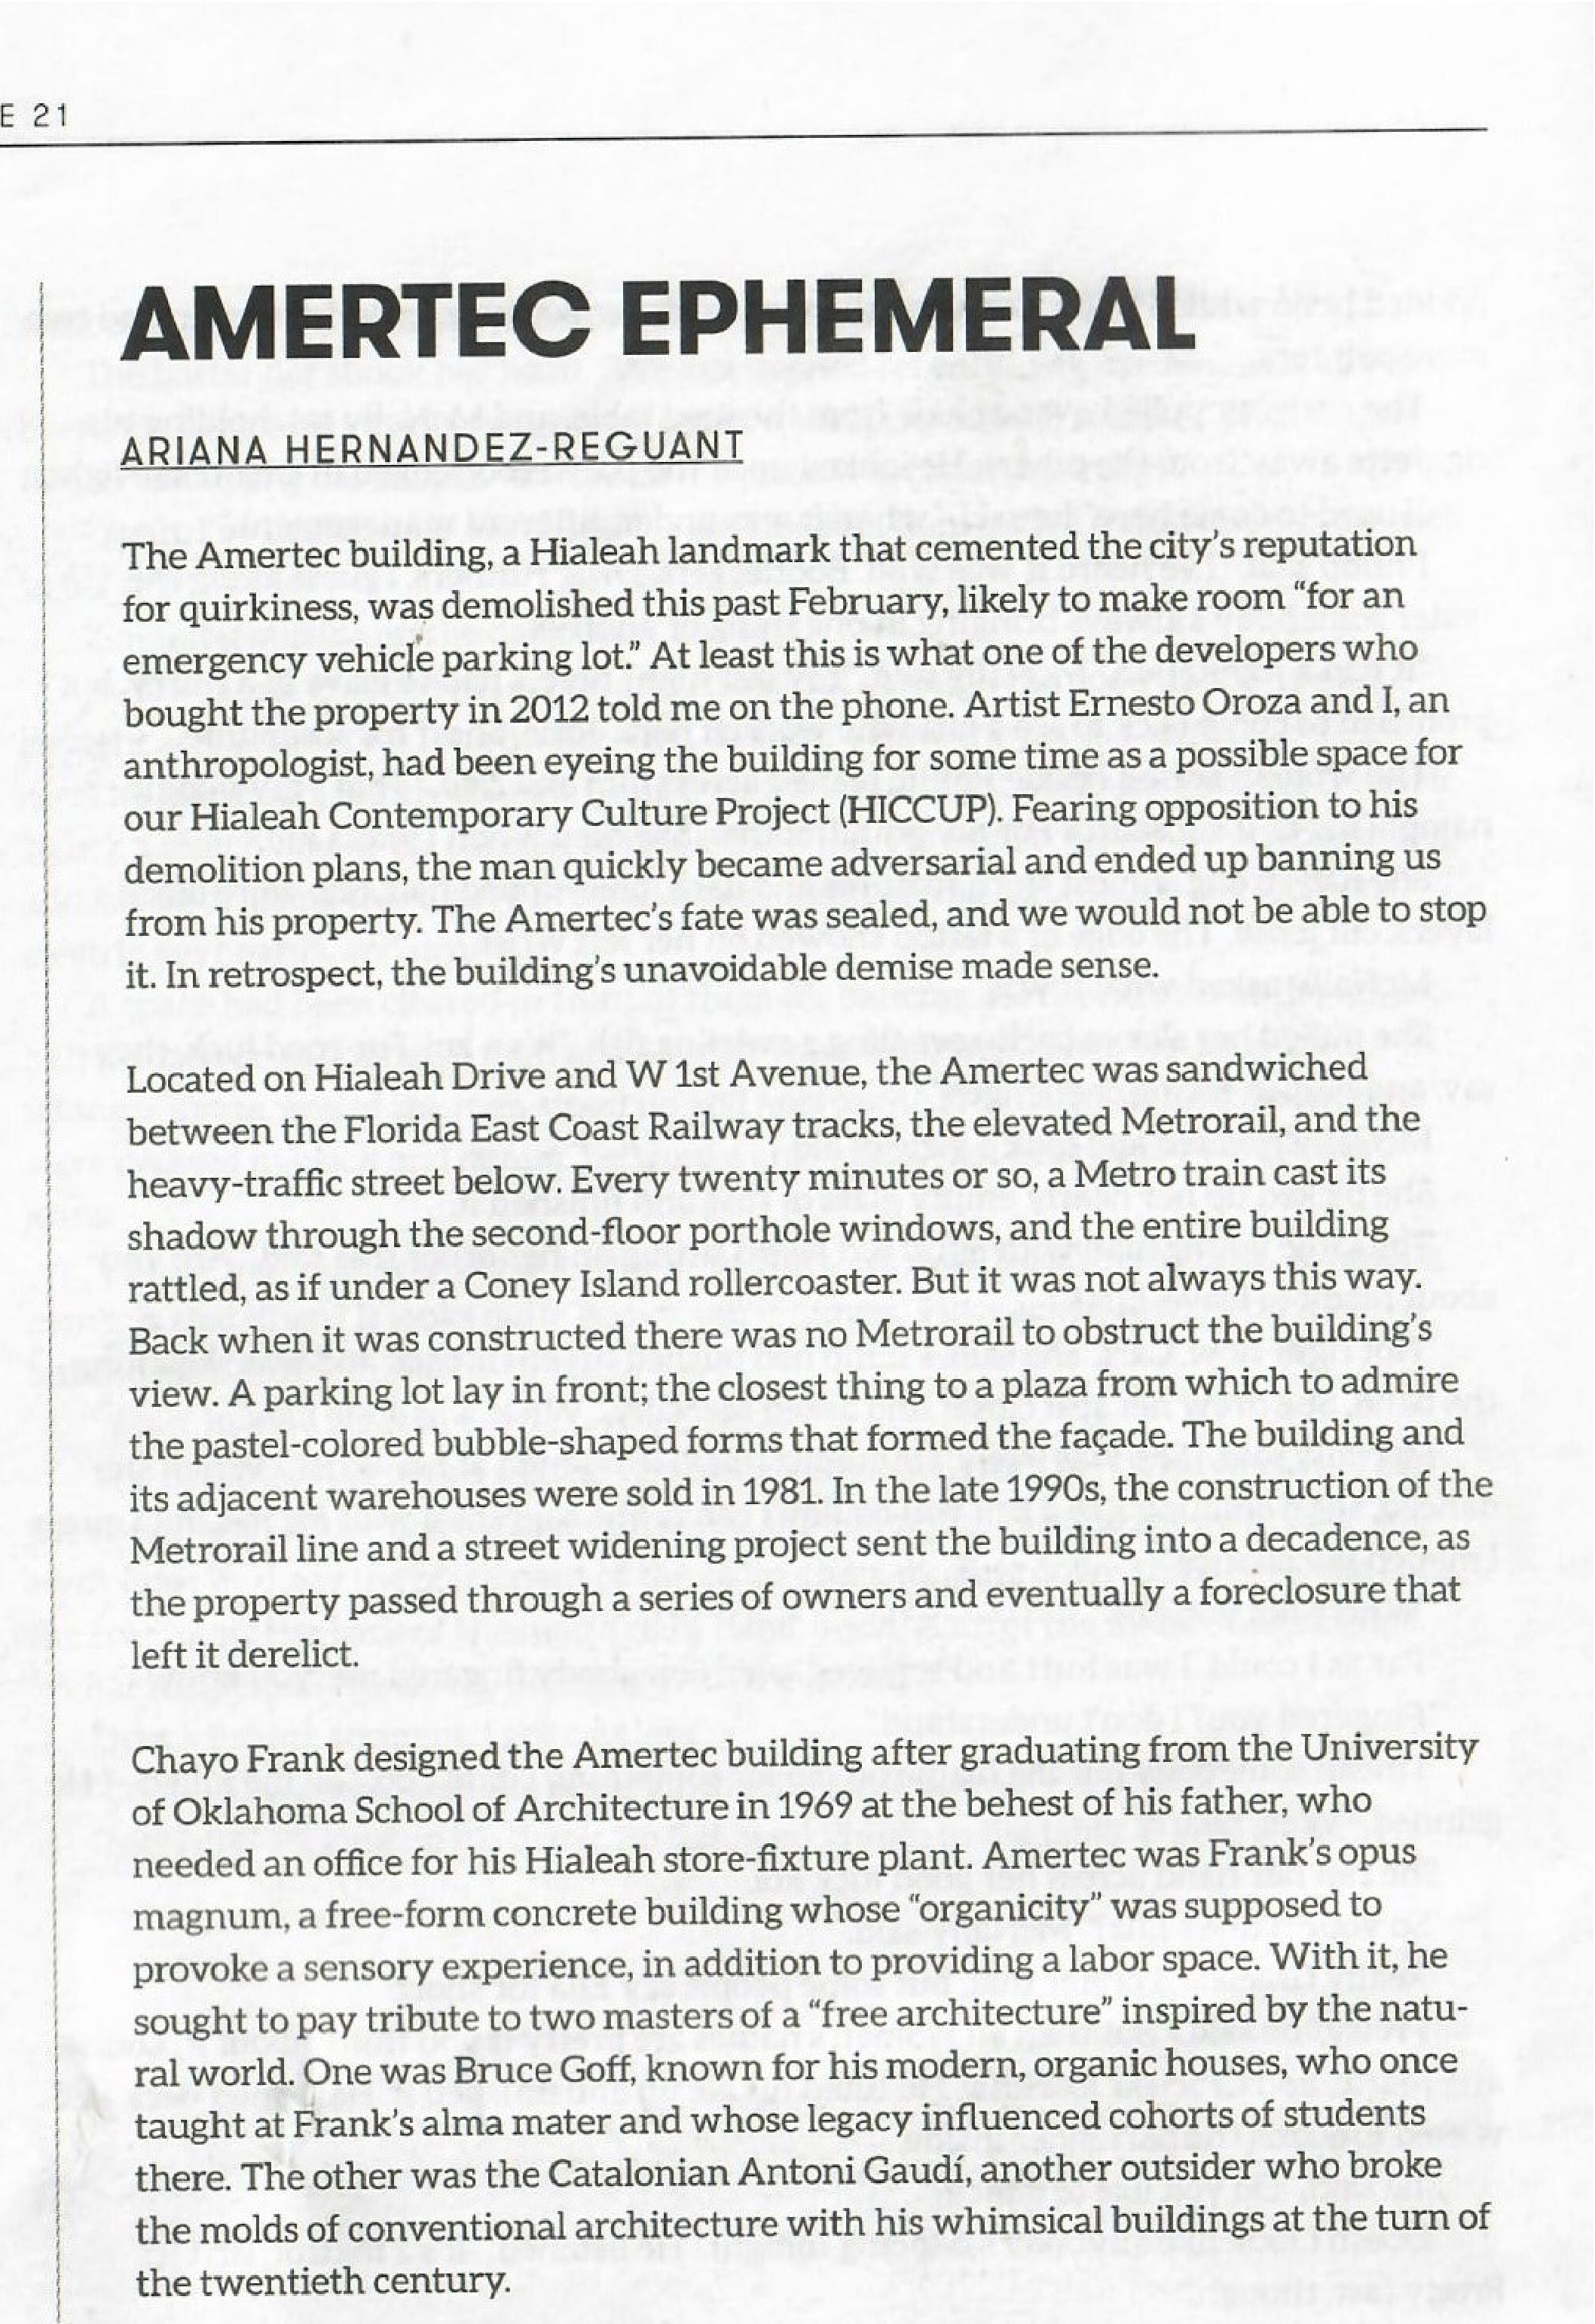 Miami Rail Amertec Article Scan-2.jpg